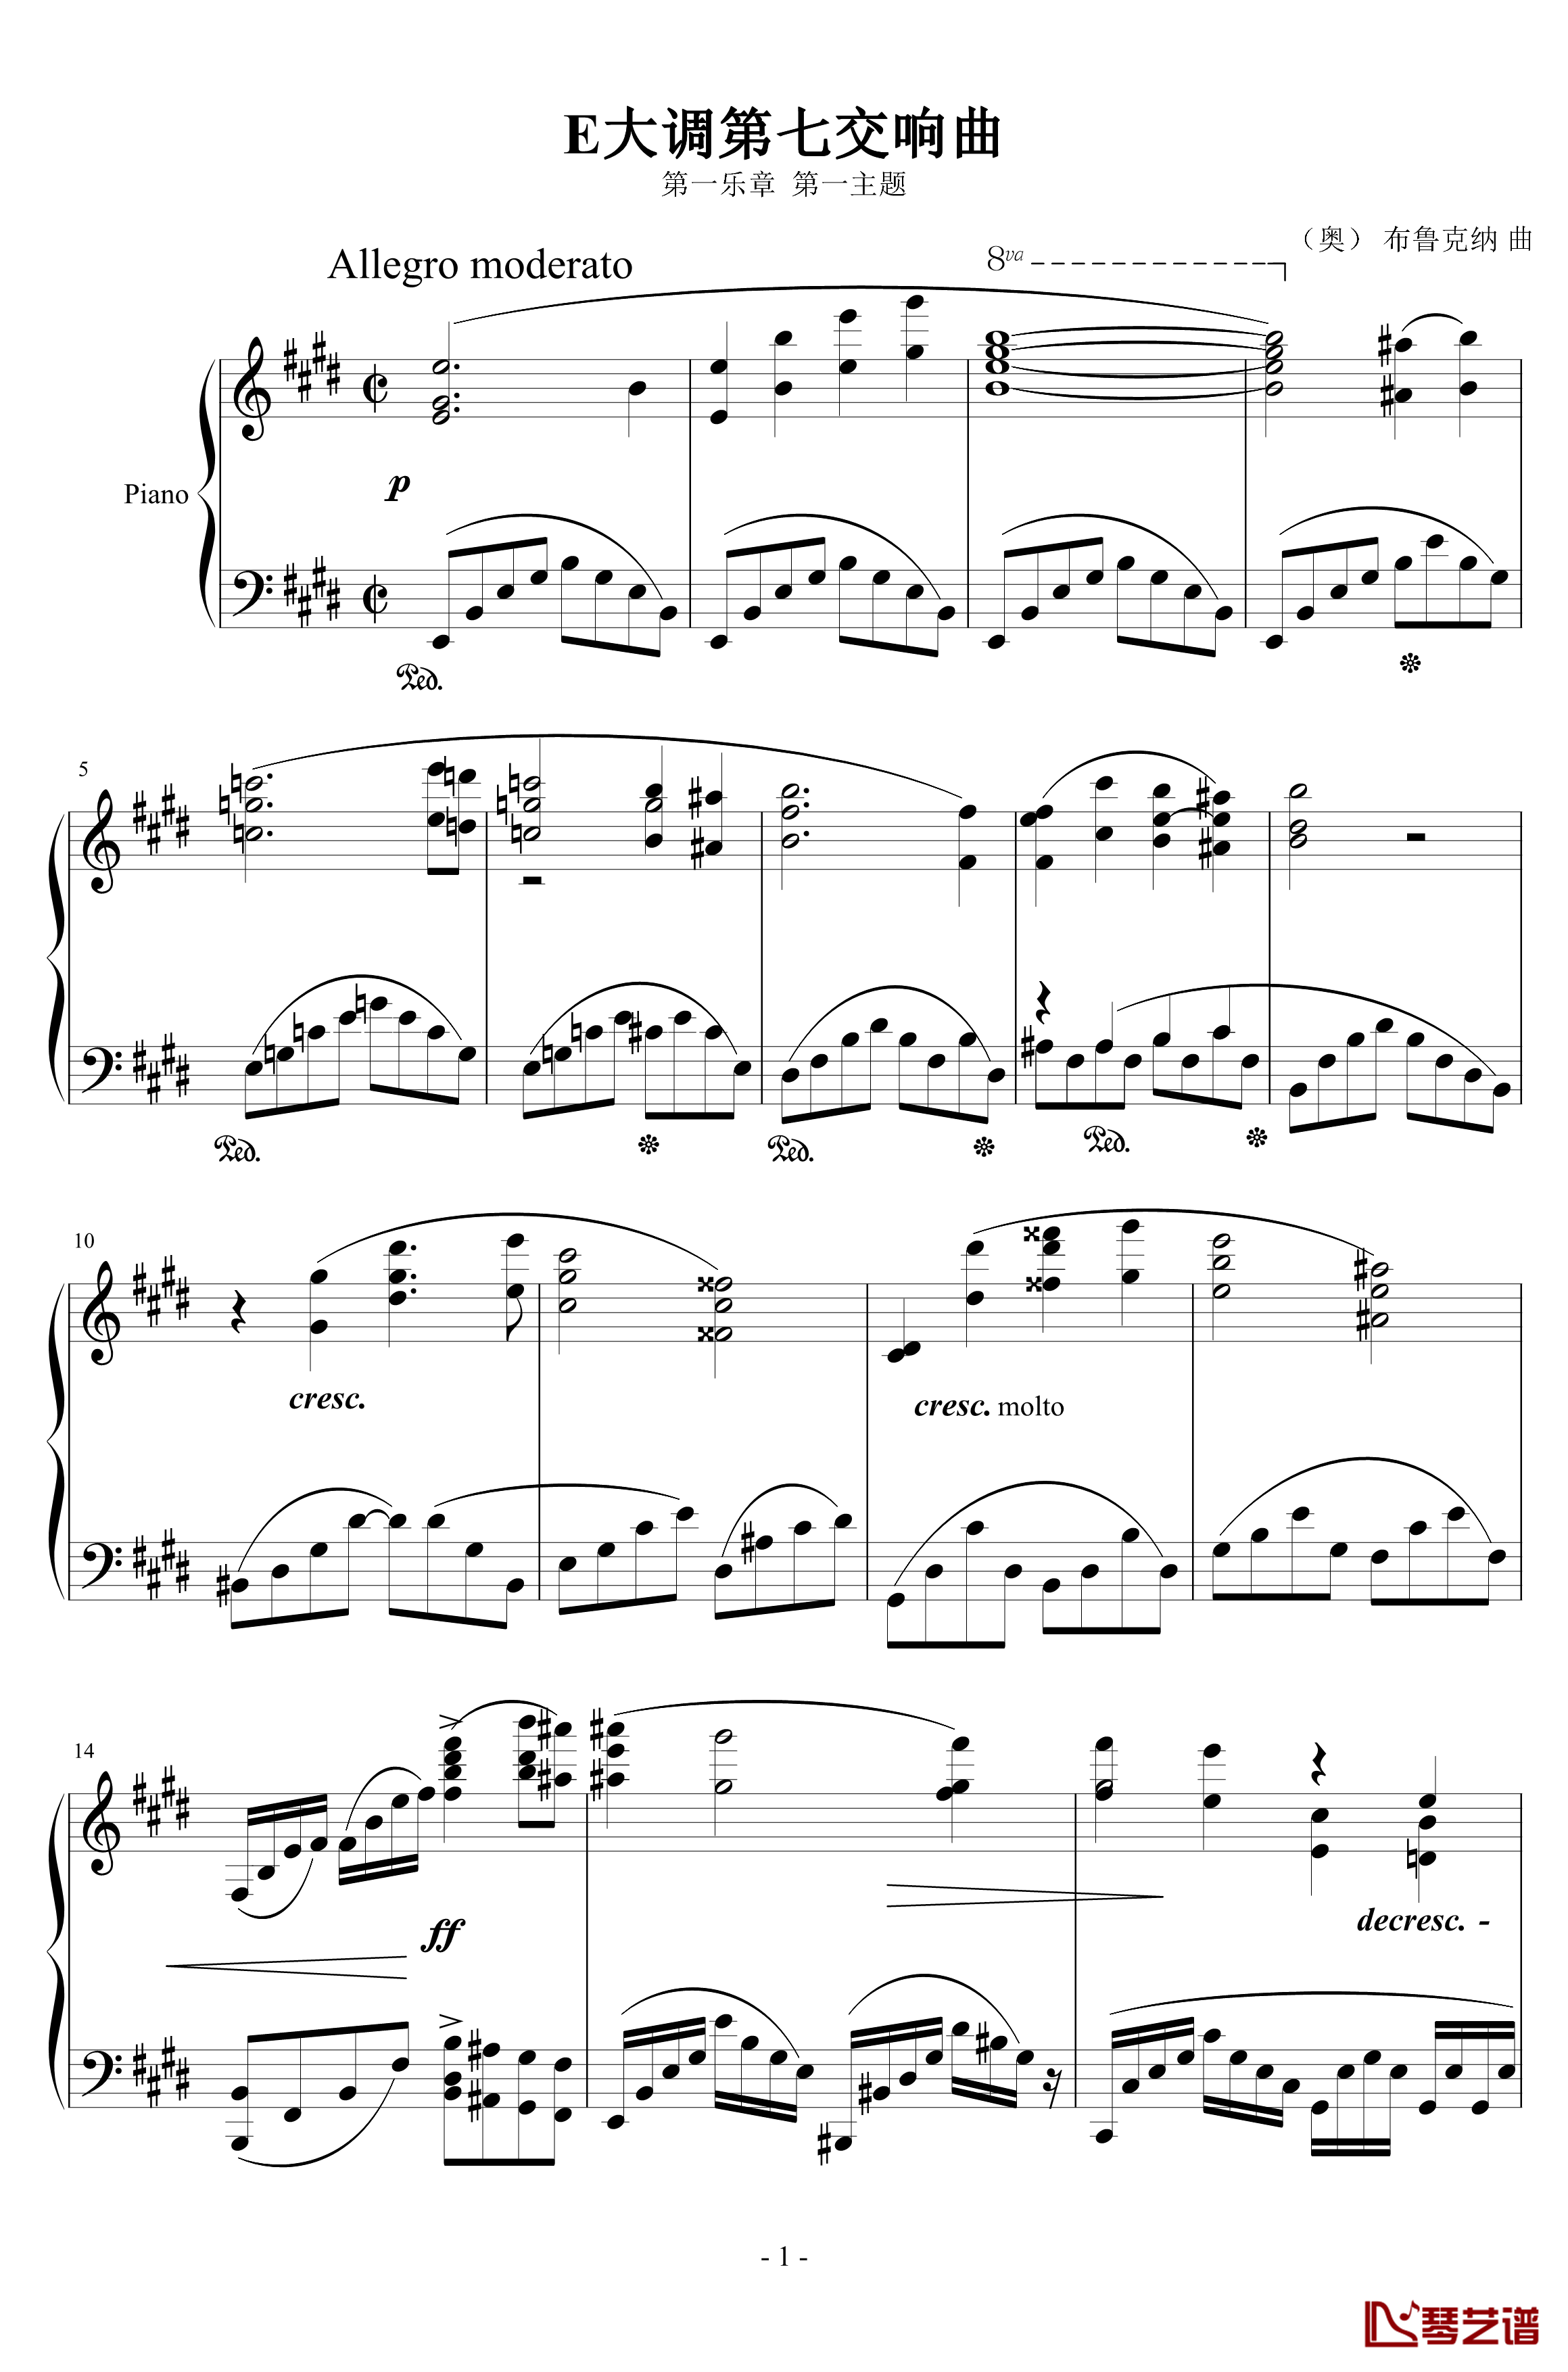 E大调第七交响曲钢琴谱-第一乐章第一主题-布鲁克纳